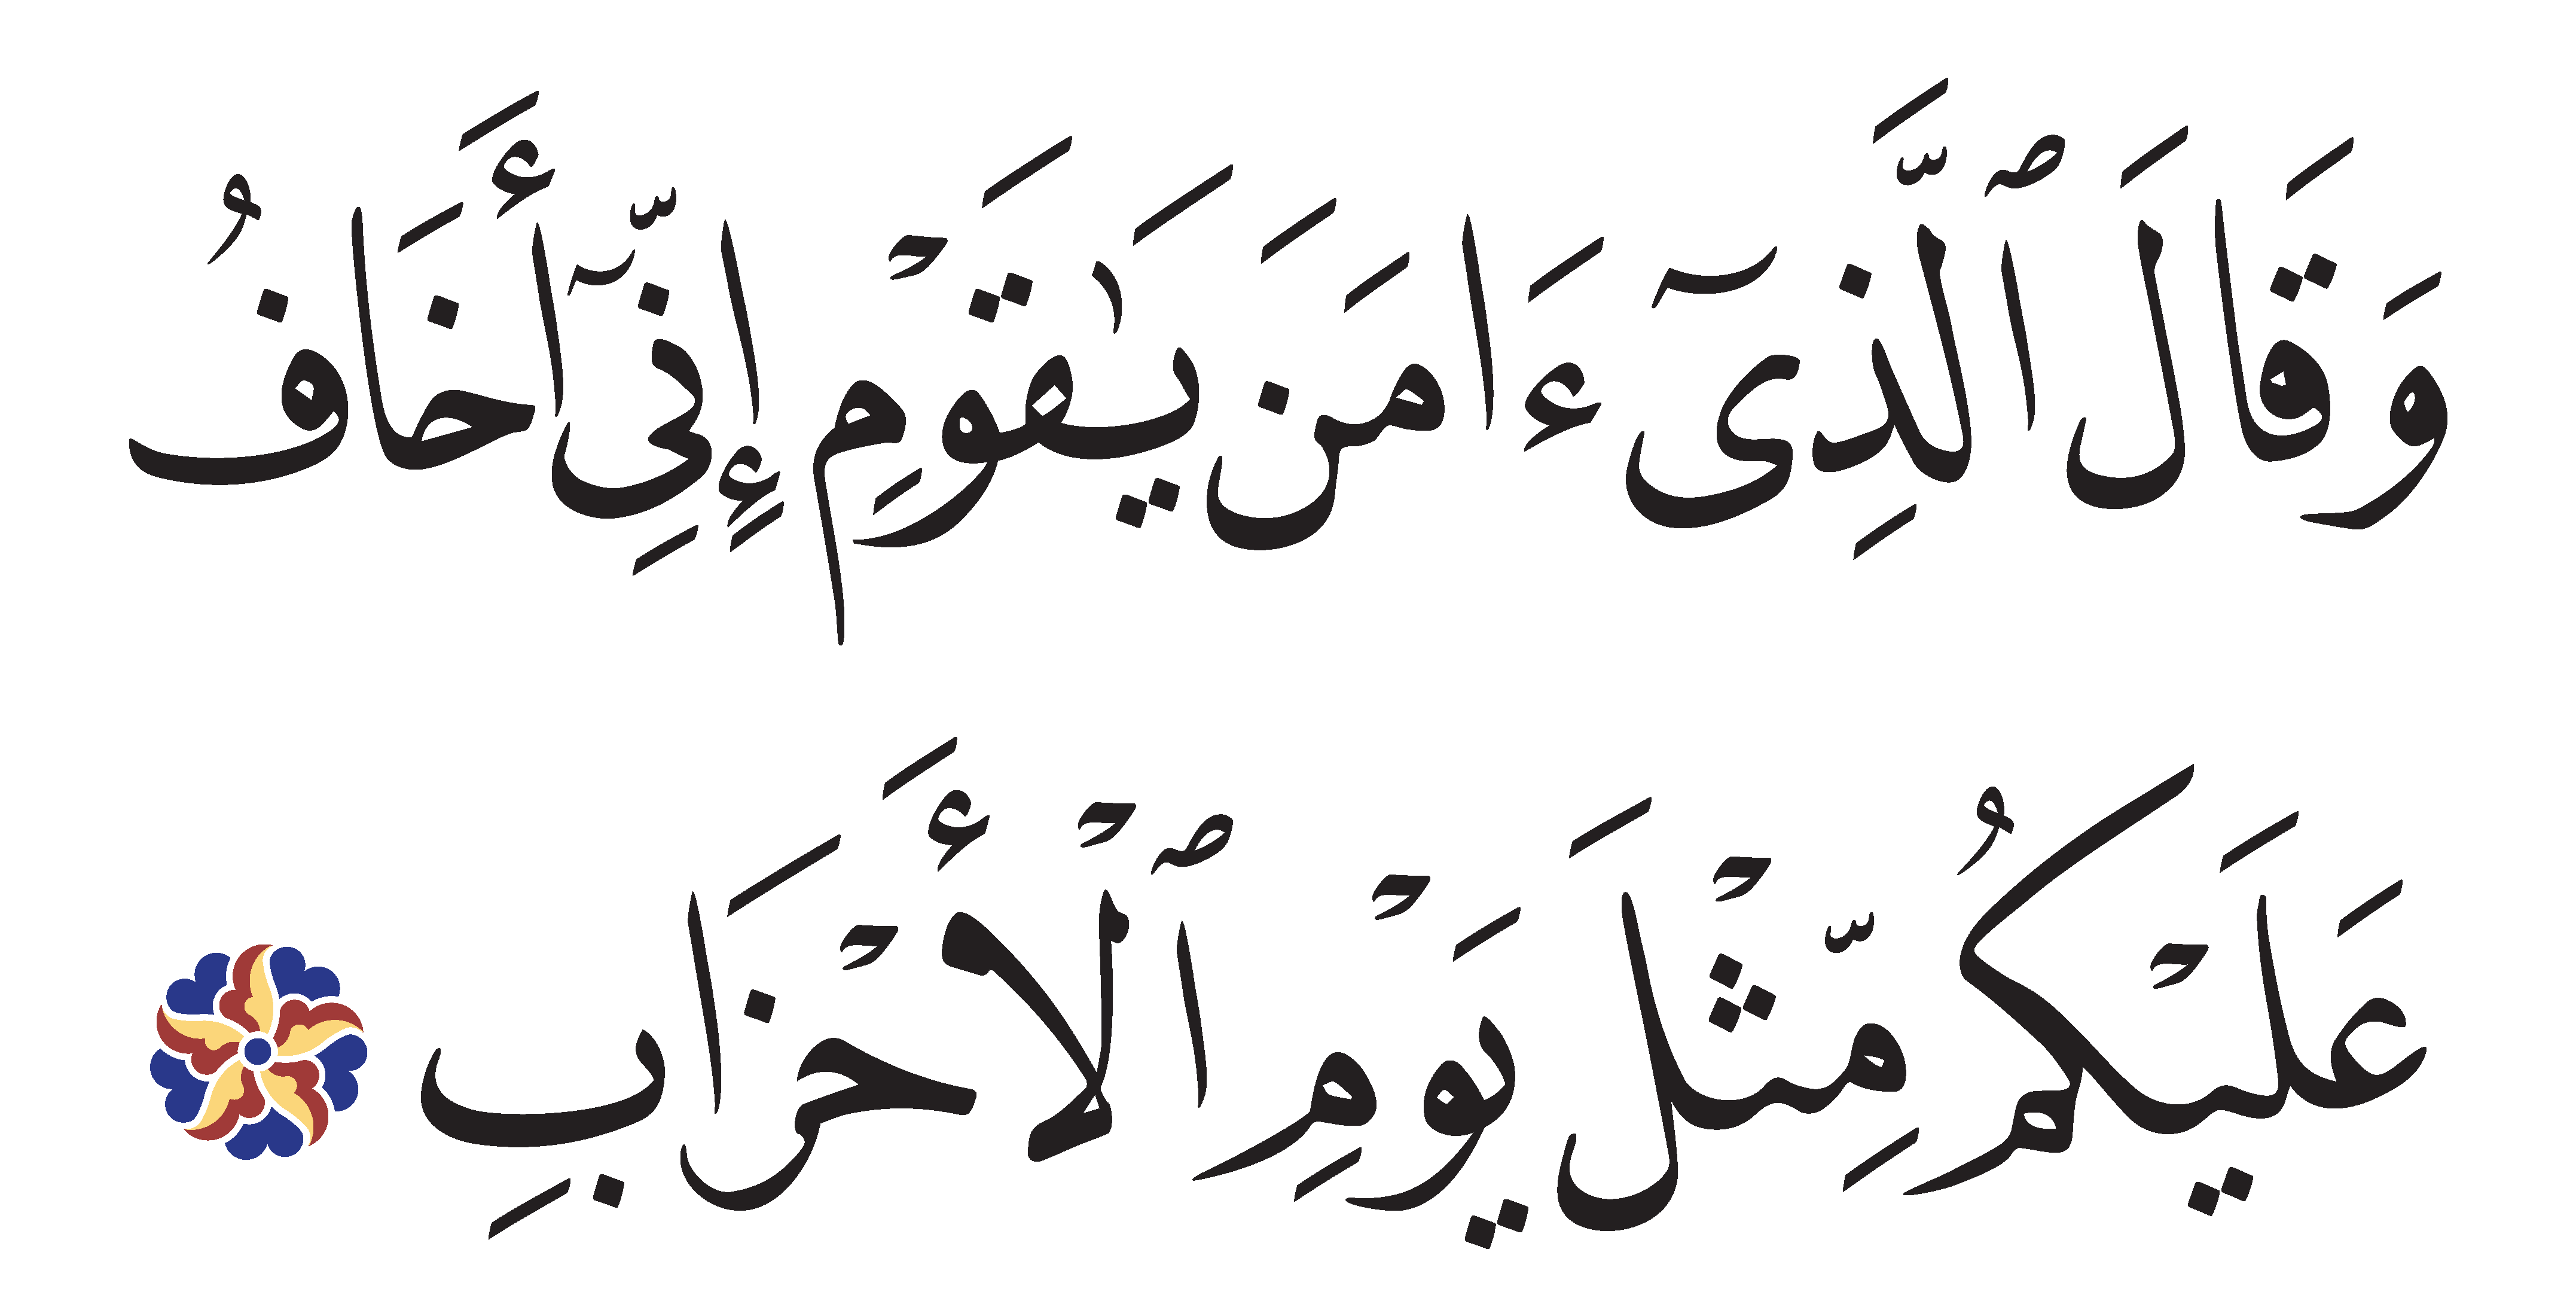 gh-fir-40-30-free-islamic-calligraphy